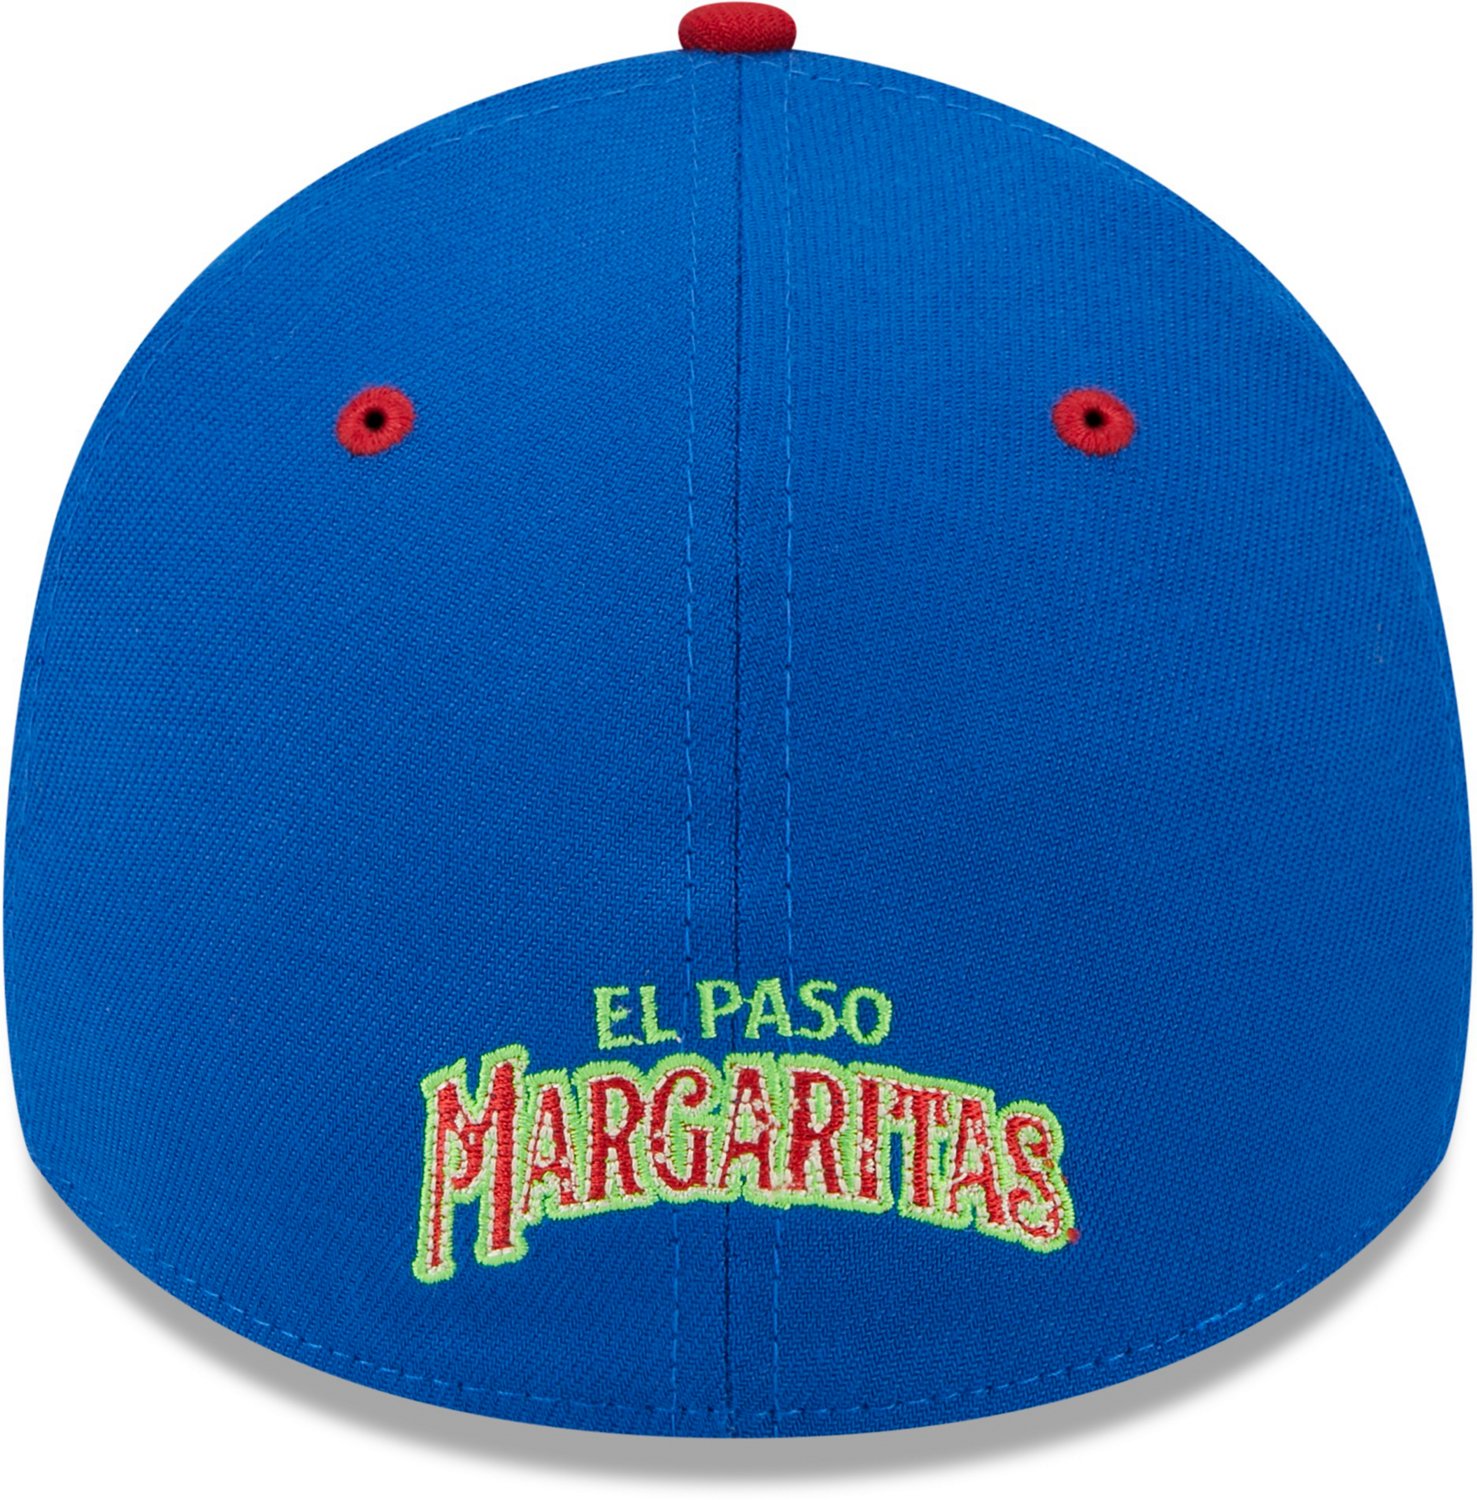 New Era 59Fifty El Paso Margaritas Chihuahuas MiLB Cap Hat Fitted